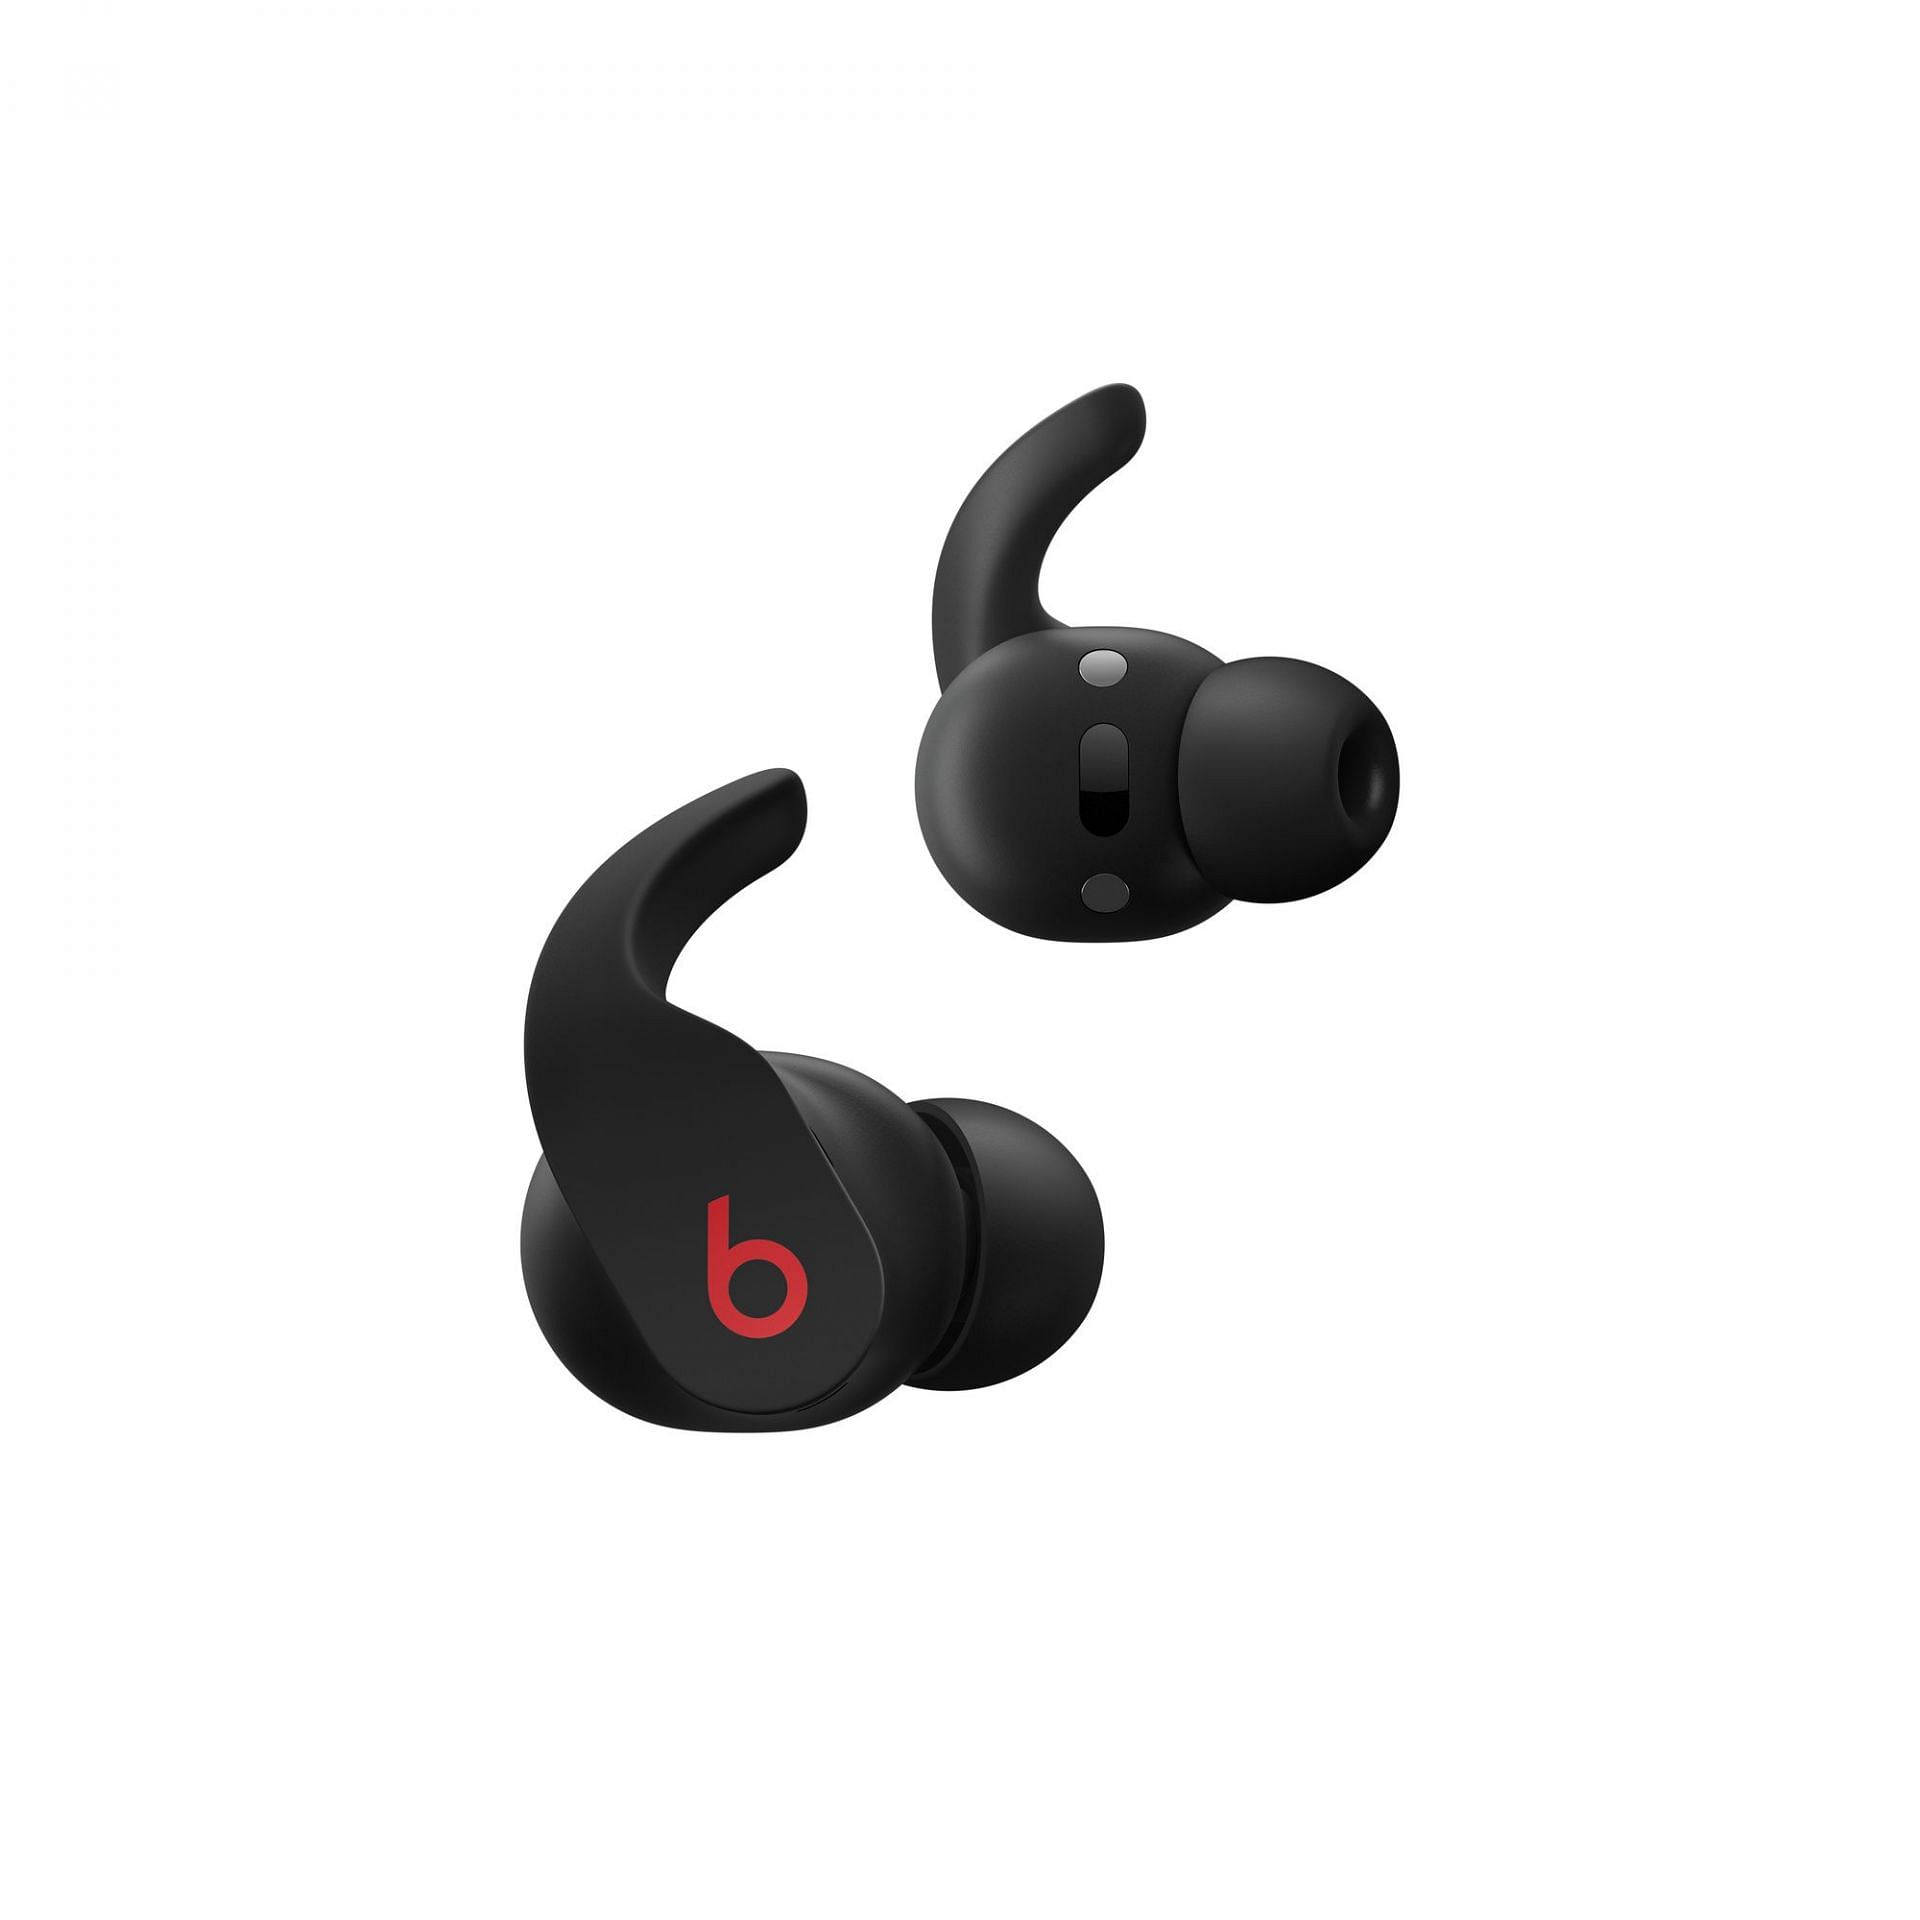 The Beats Fit Pro (Image via Apple)